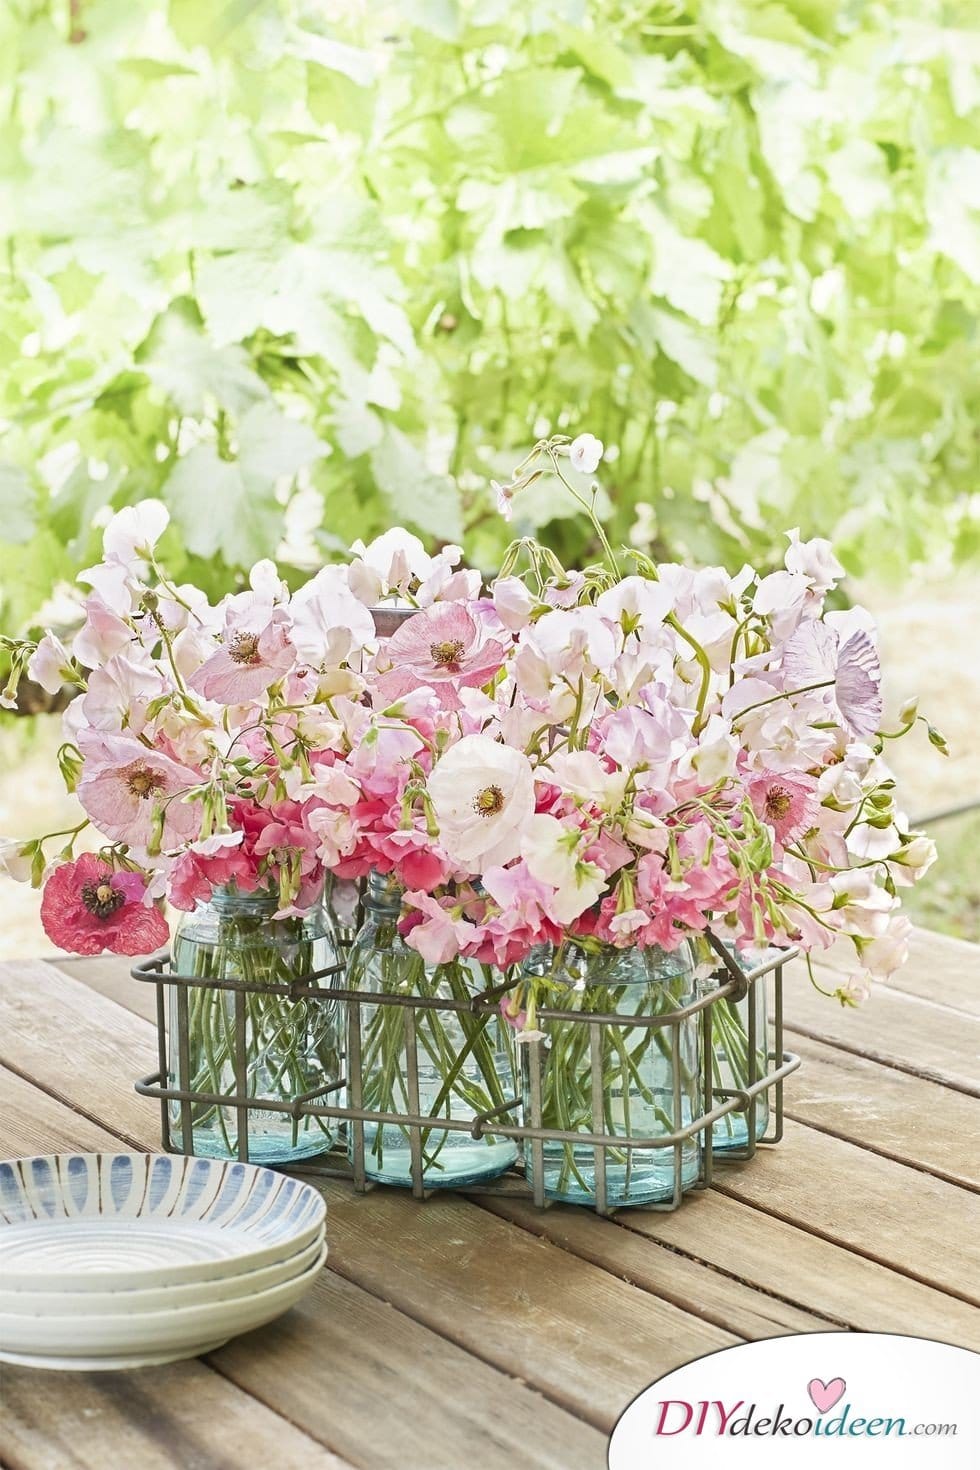 Frühlingstischdeko, Tischdeko, Tisch dekorieren, Blumendeko, Blumen Tischdeko, Frühling, Frühlingsdeko, Frühling dekoireren, Frühling Dekoidee